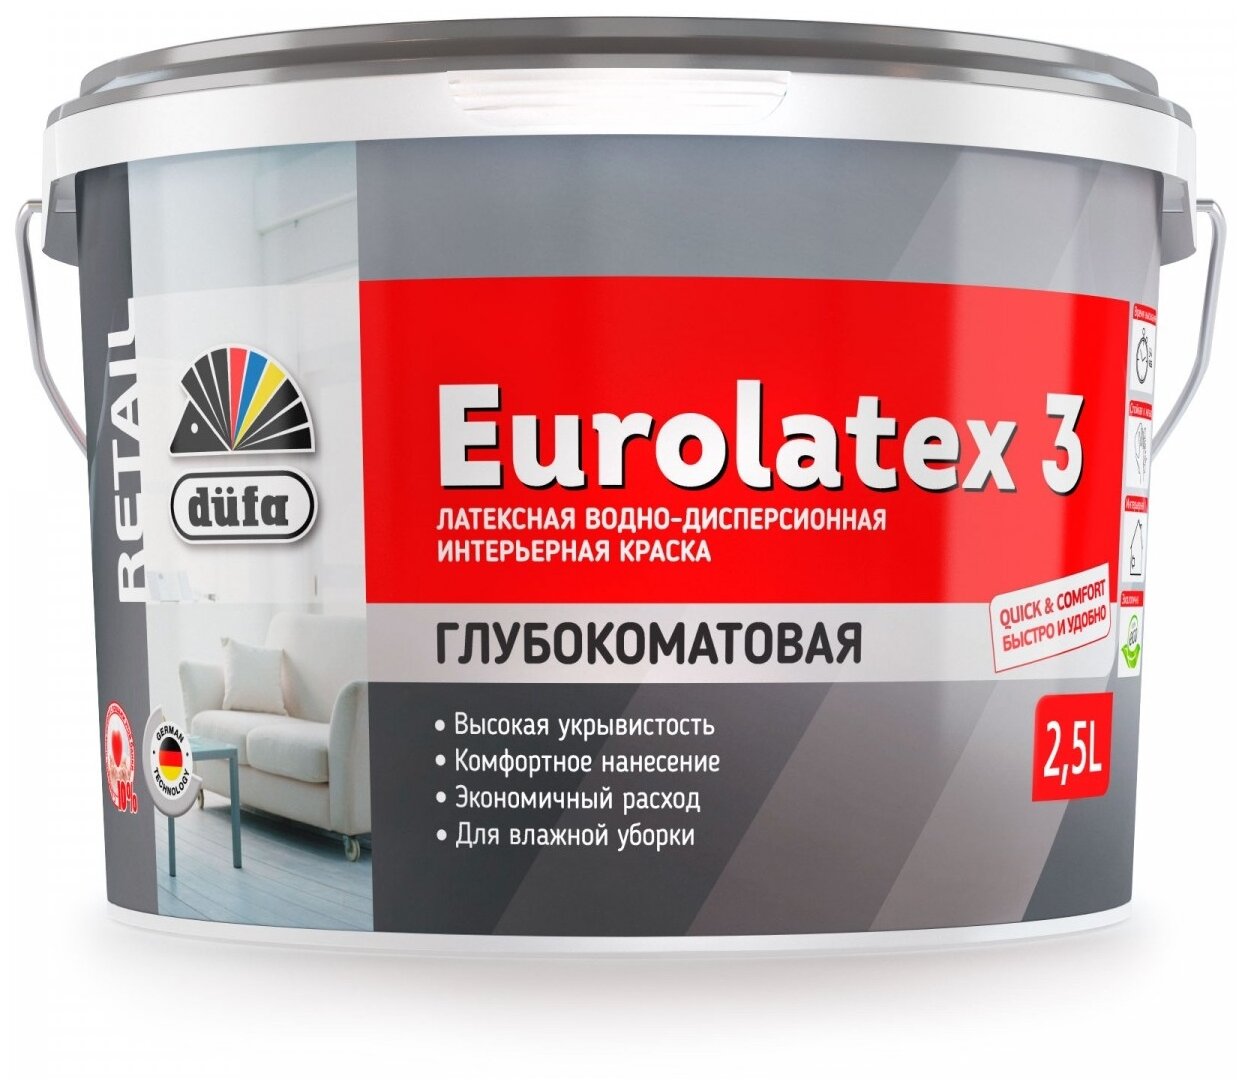    Dufa Retail Eurolatex 3  (2,5)